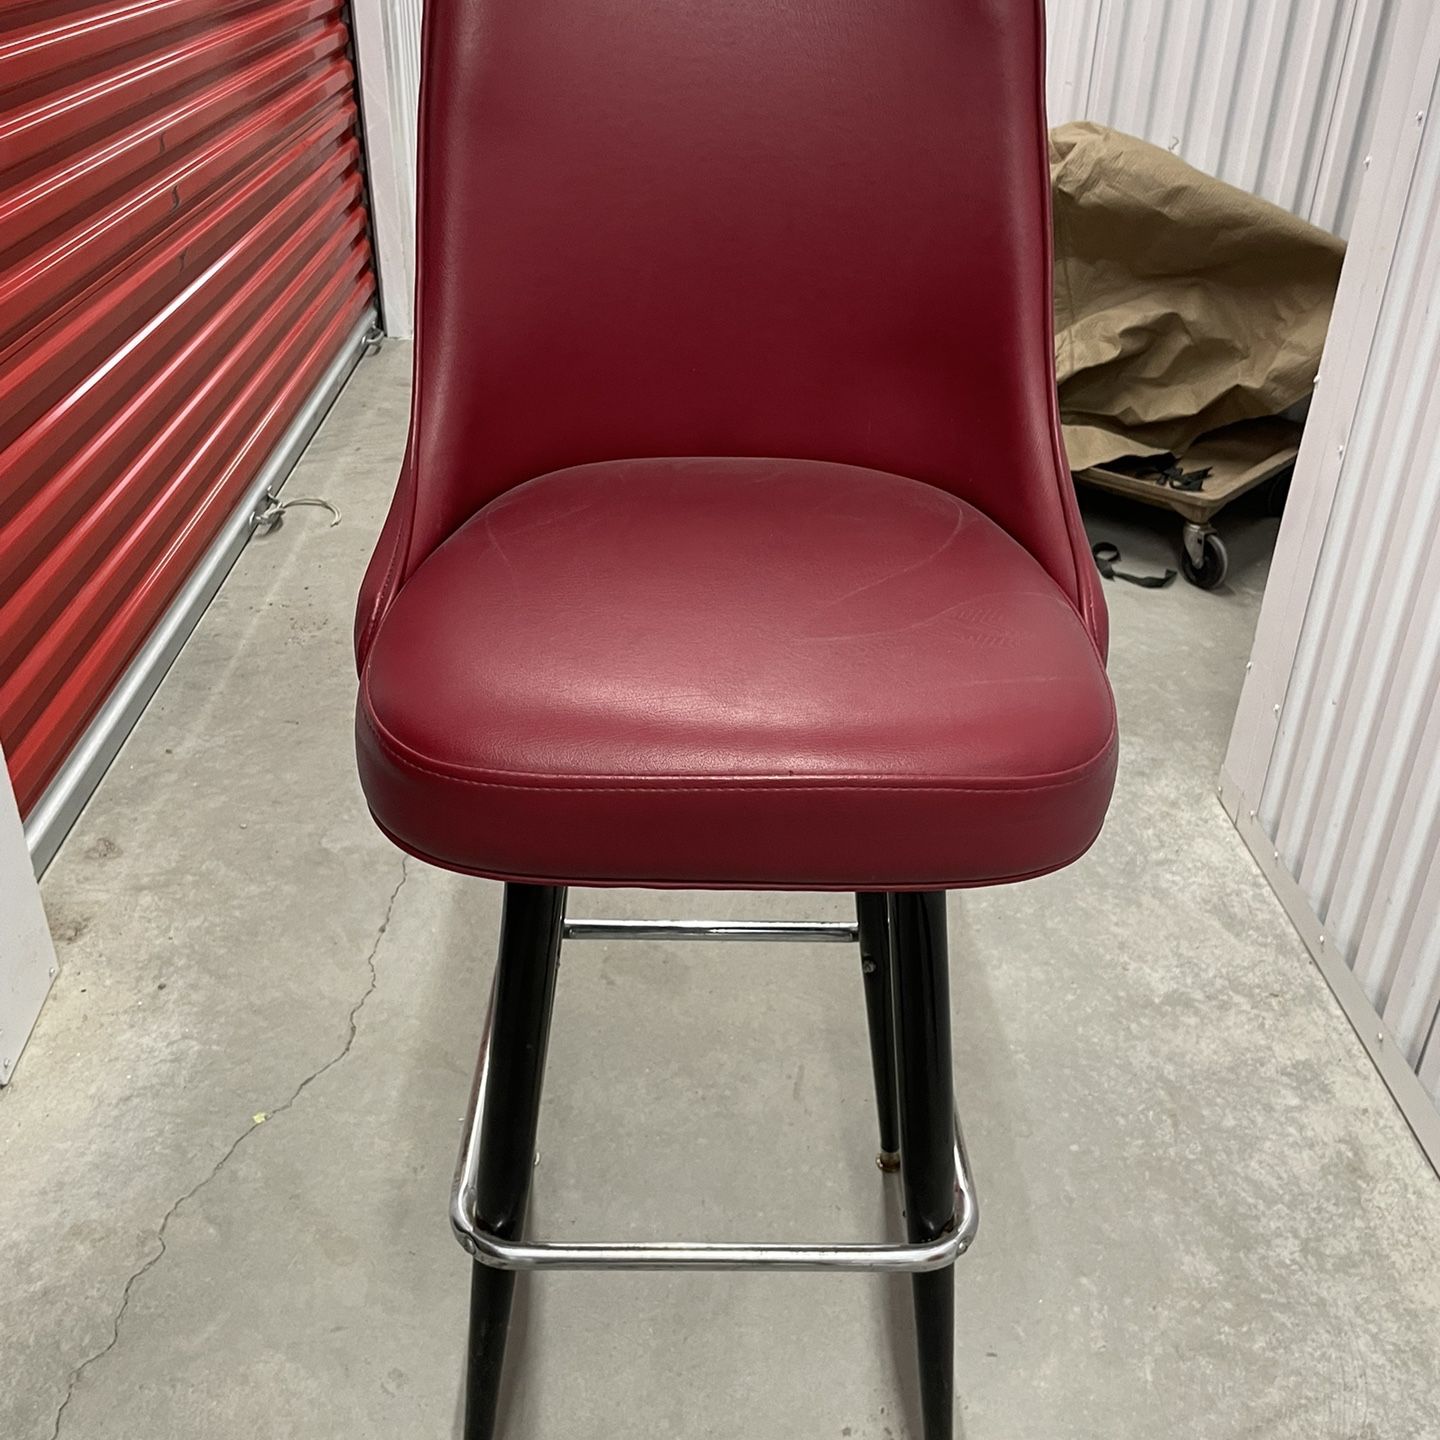 Red Swivel Bar Stool - Lounger Bucket Seat - High Chair